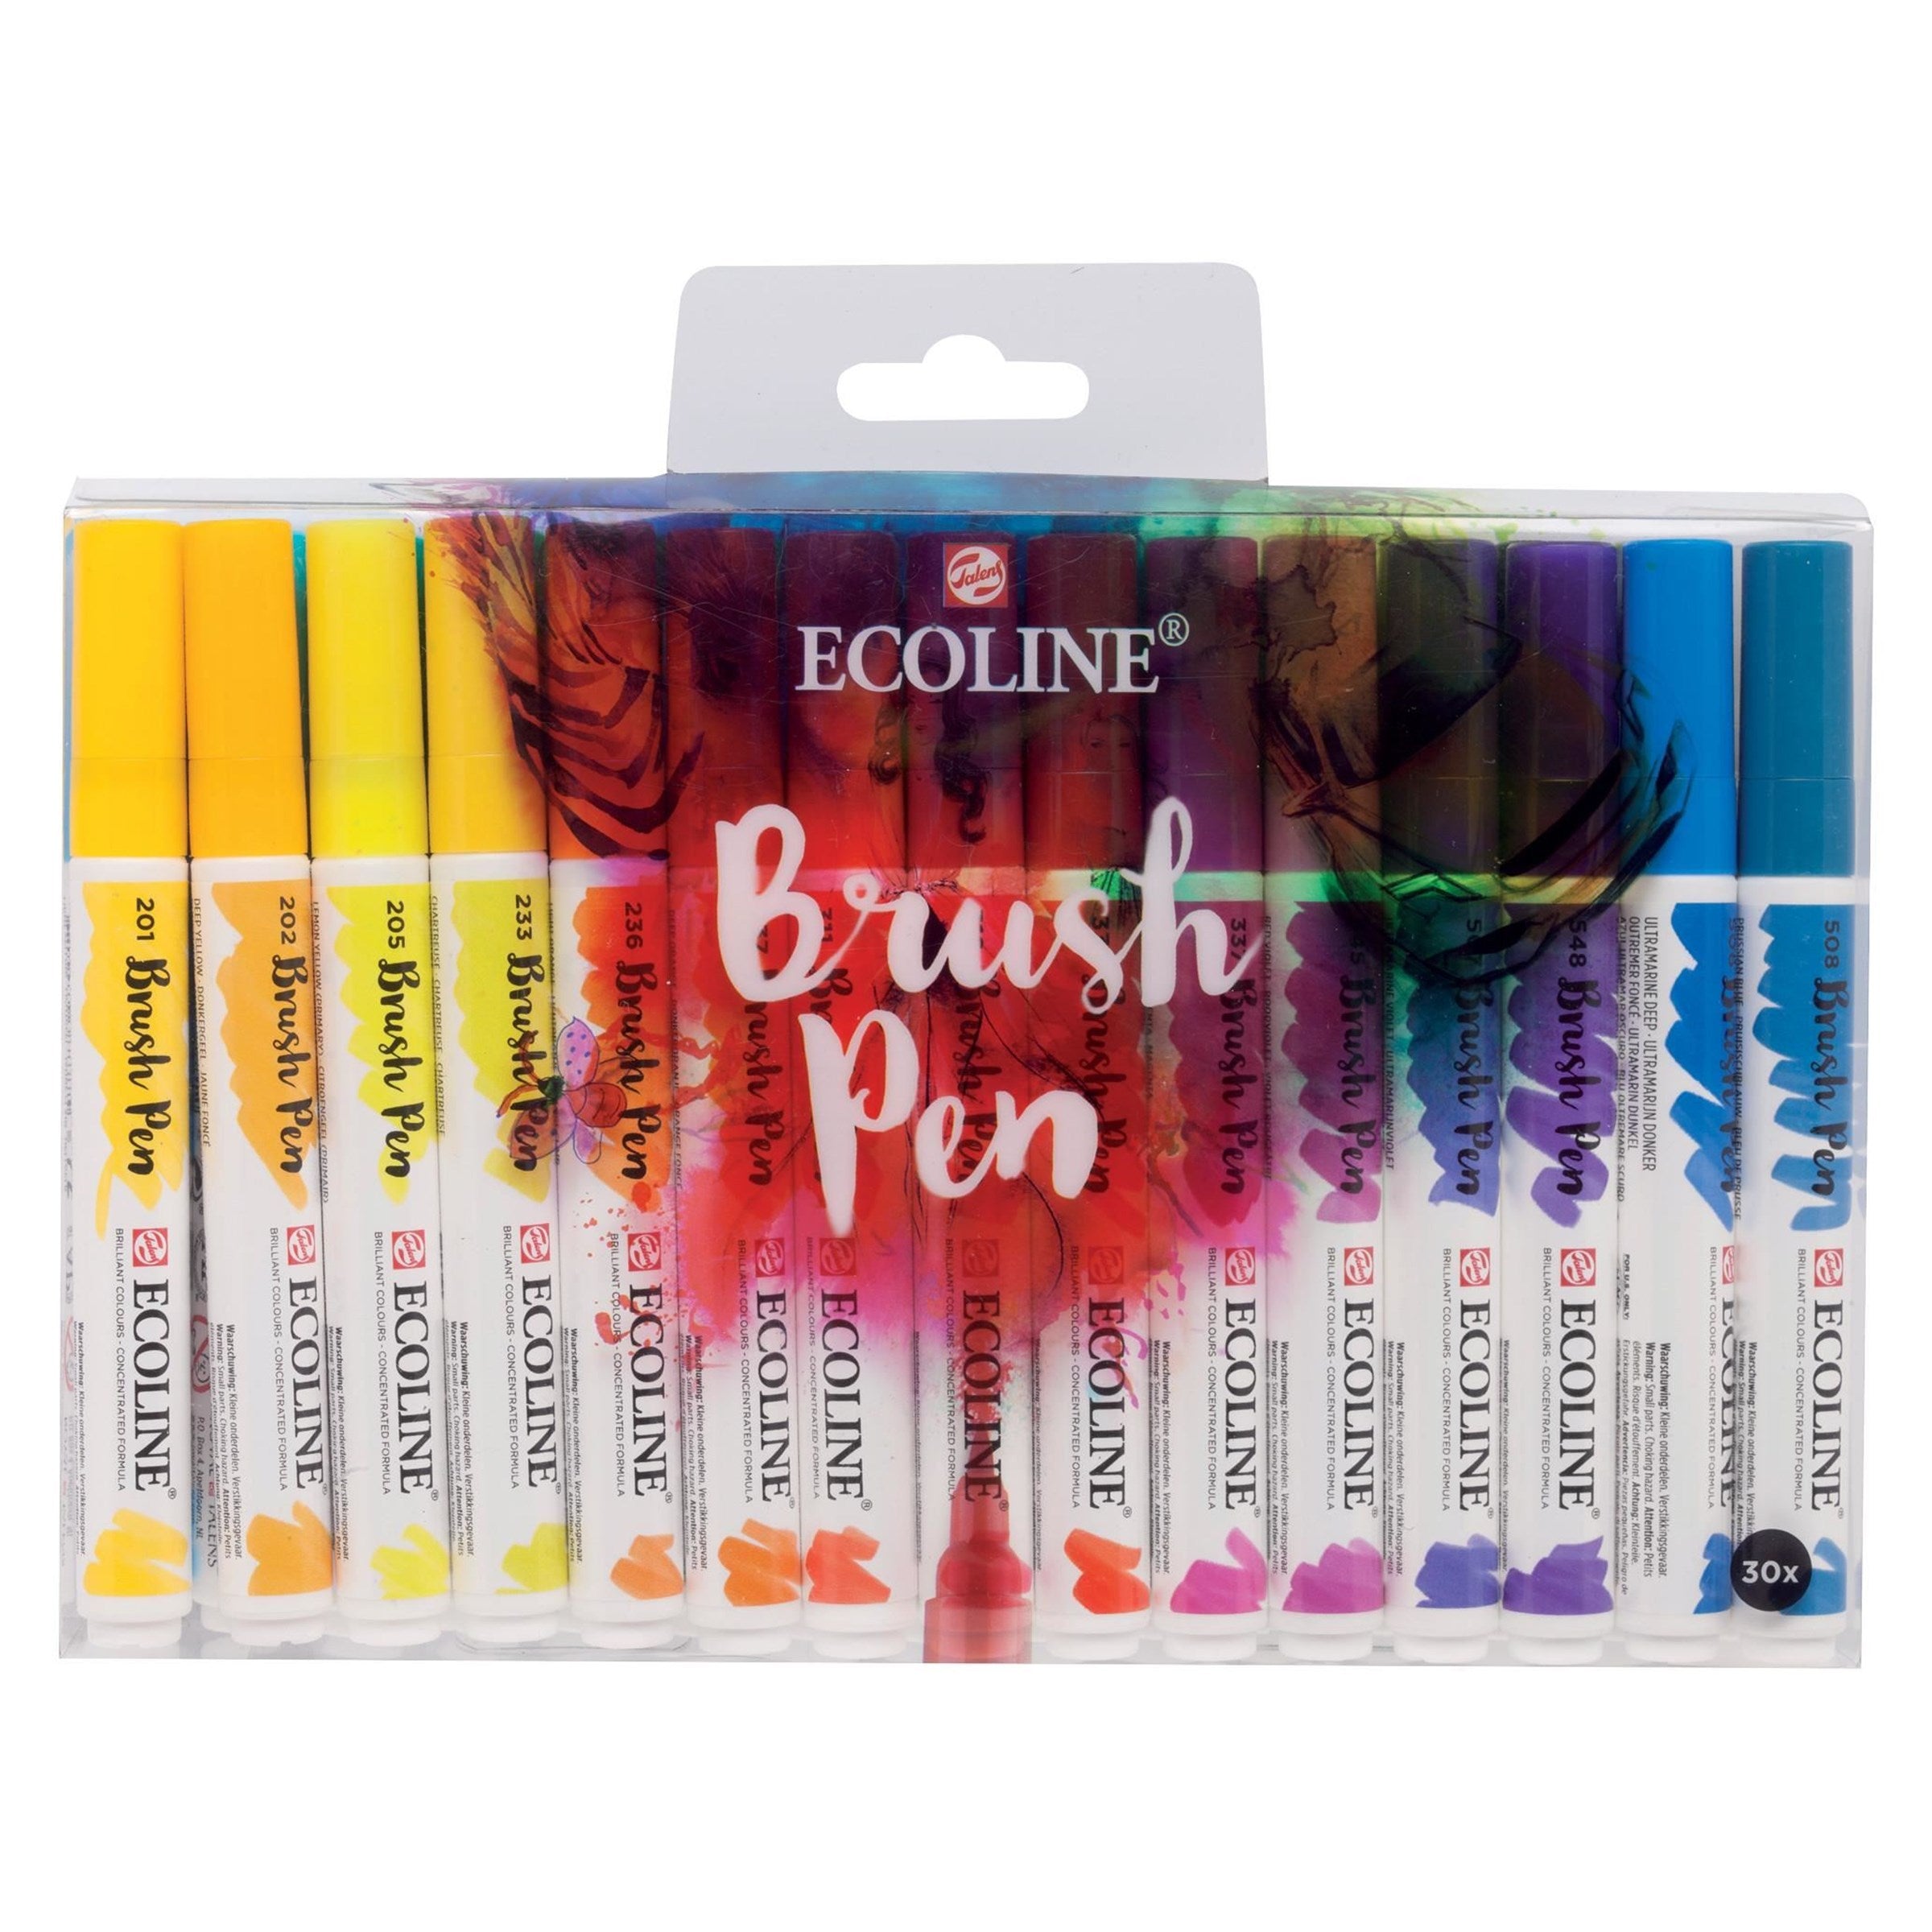 Ecocline Brush Pens set of 30